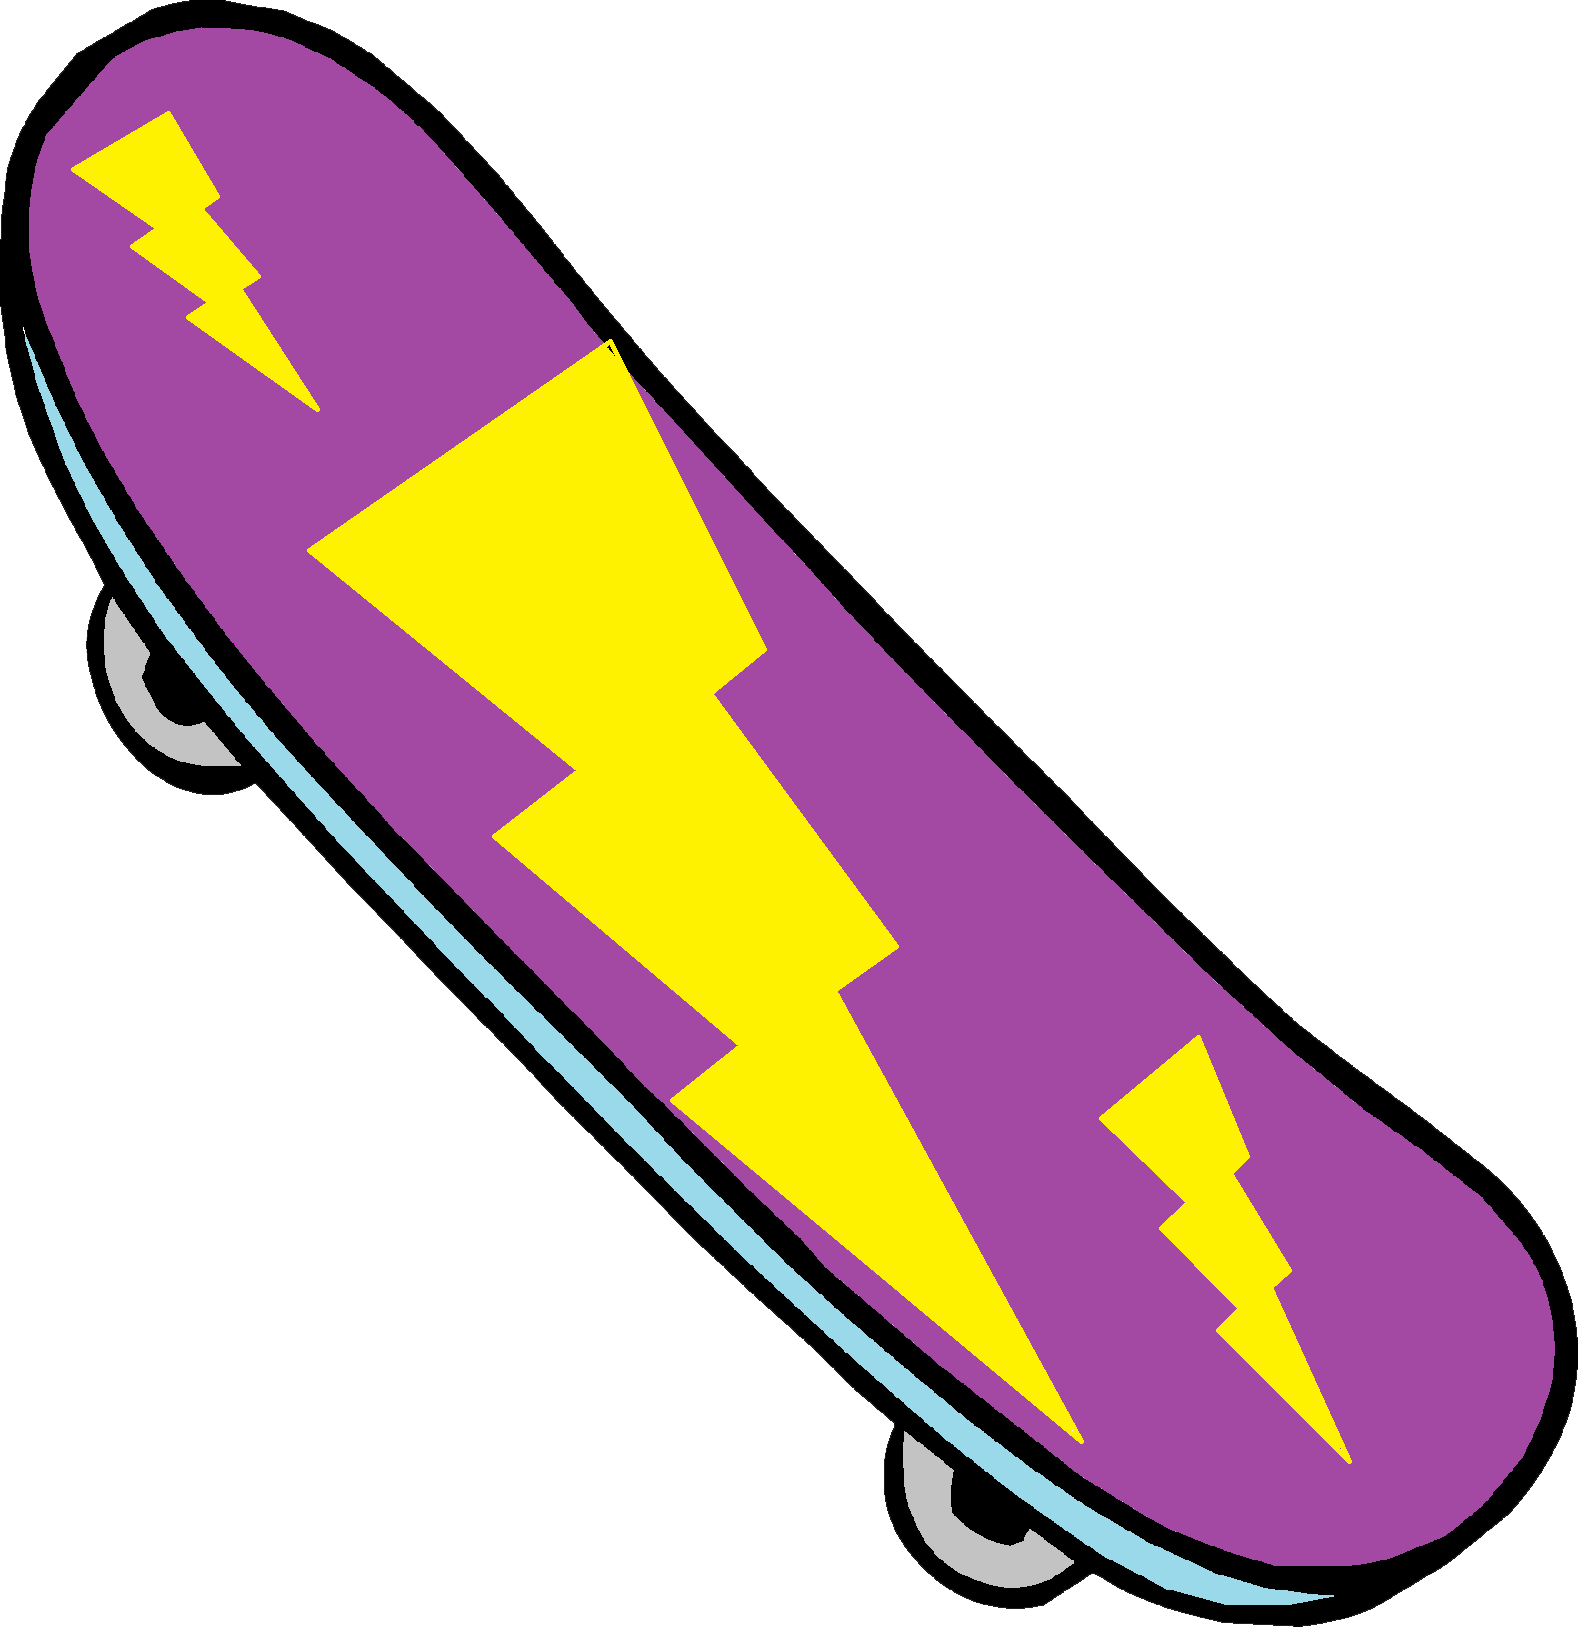 Download PNG image - Skateboard PNG Clipart 